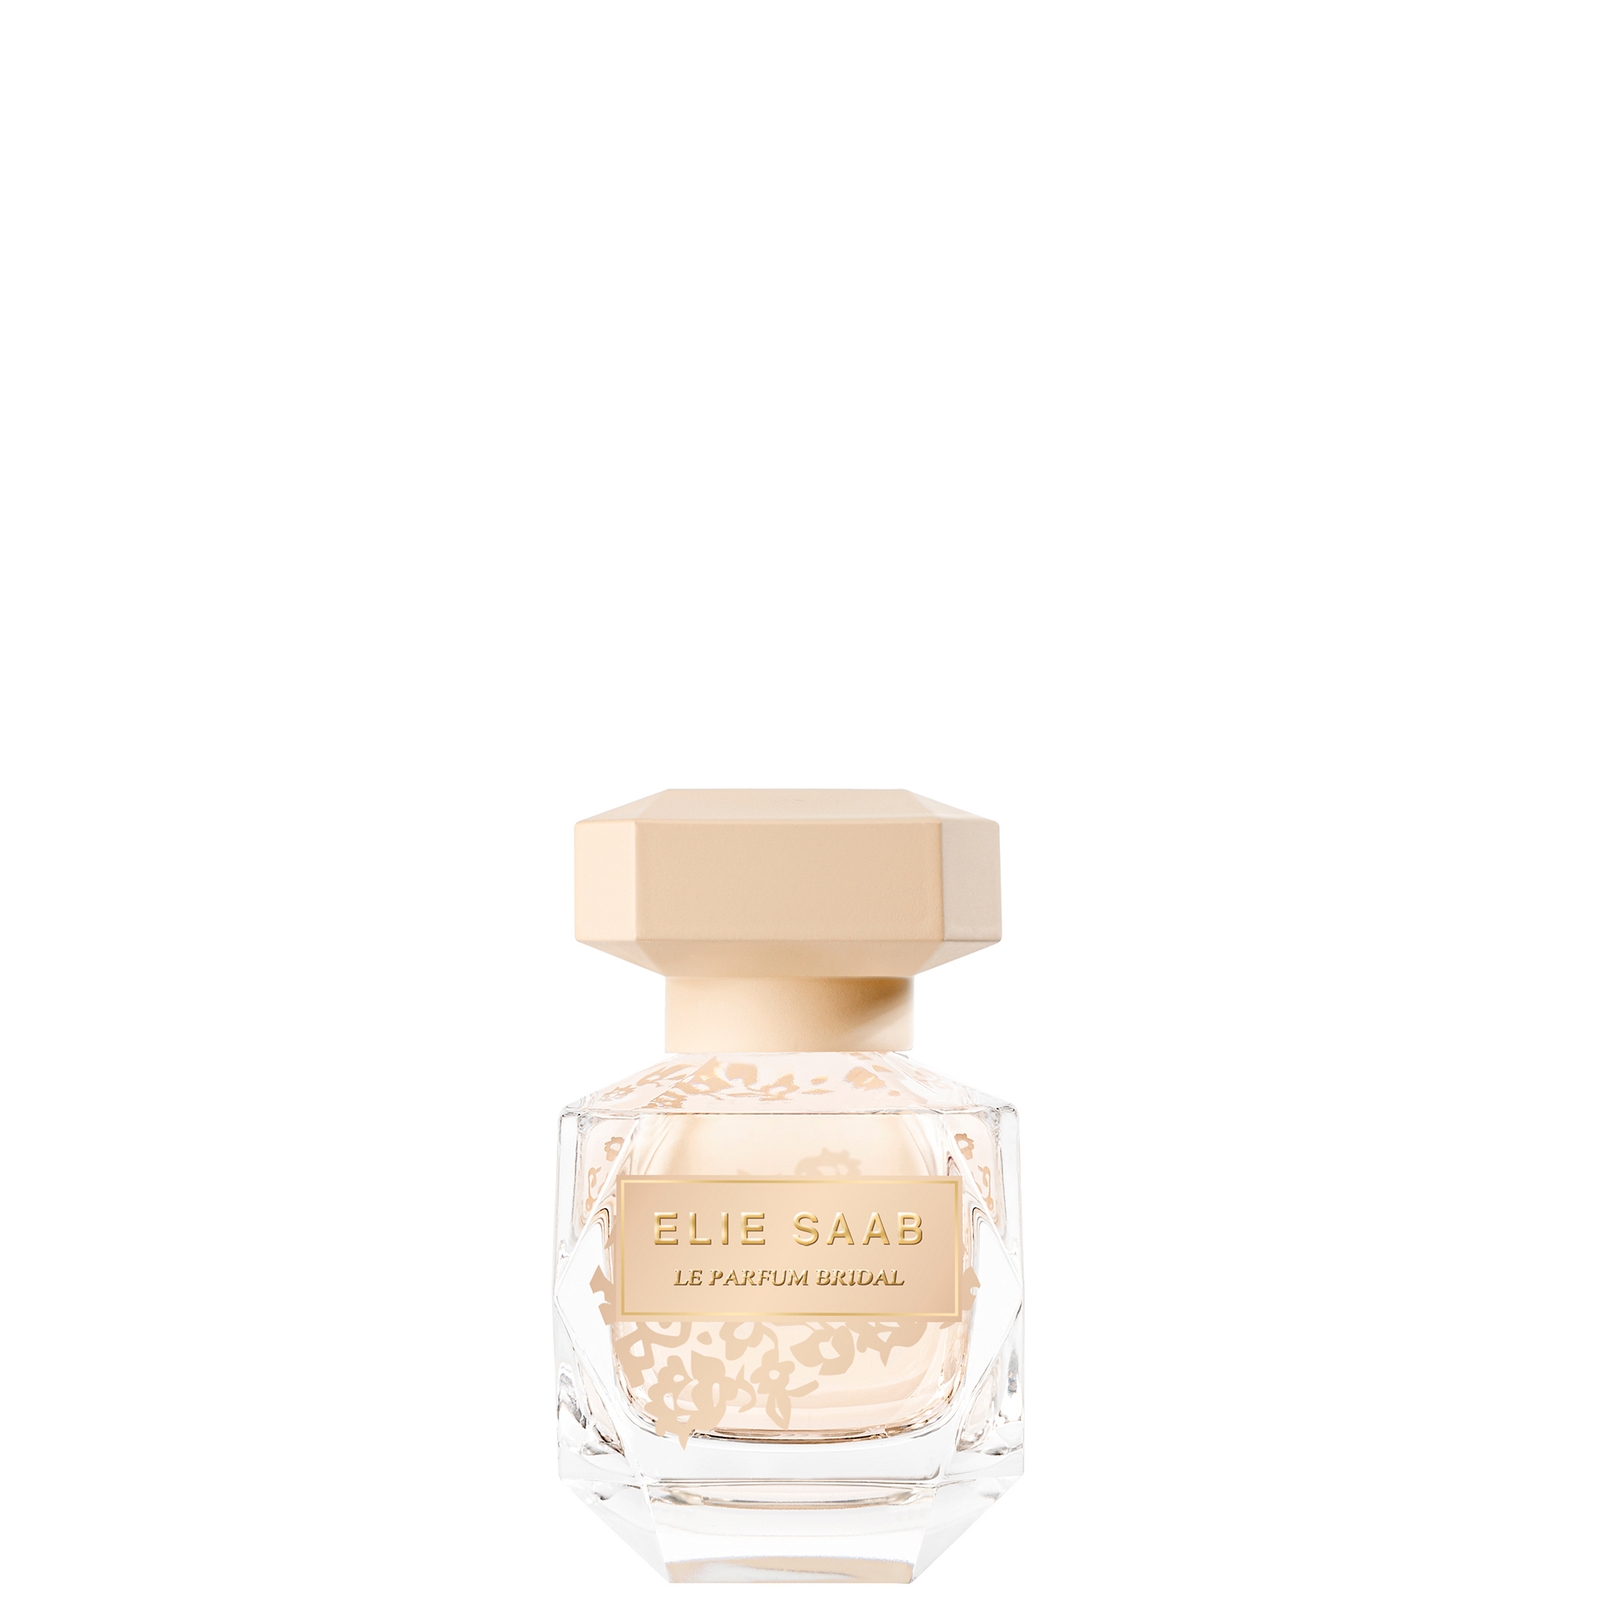 Image of Elie Saab Le Parfum Bridal Eau de Parfum Profumo Spray 30ml